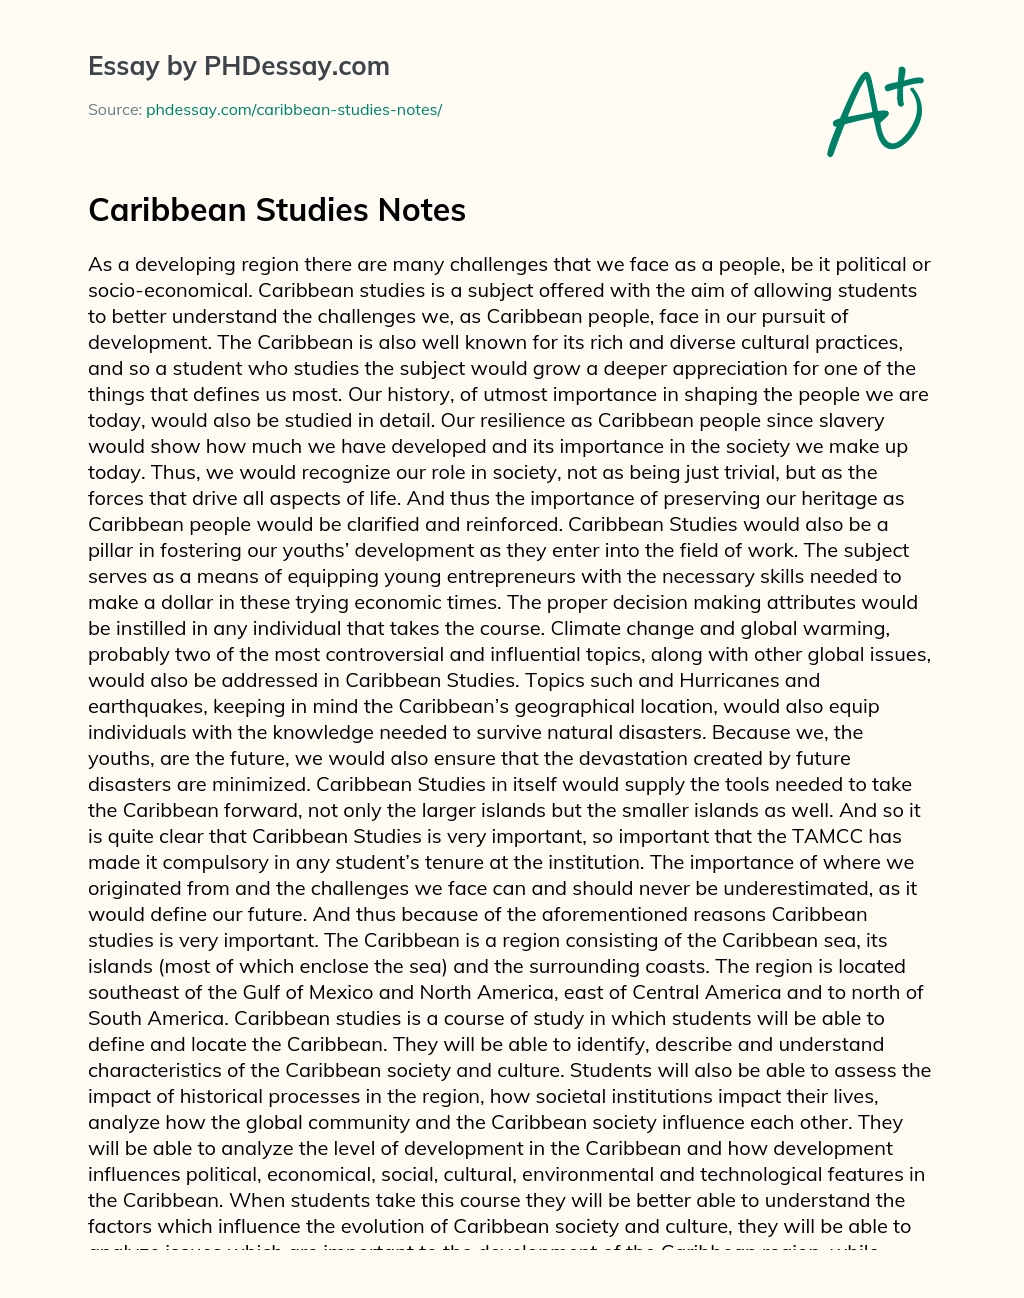 Caribbean Studies Notes essay